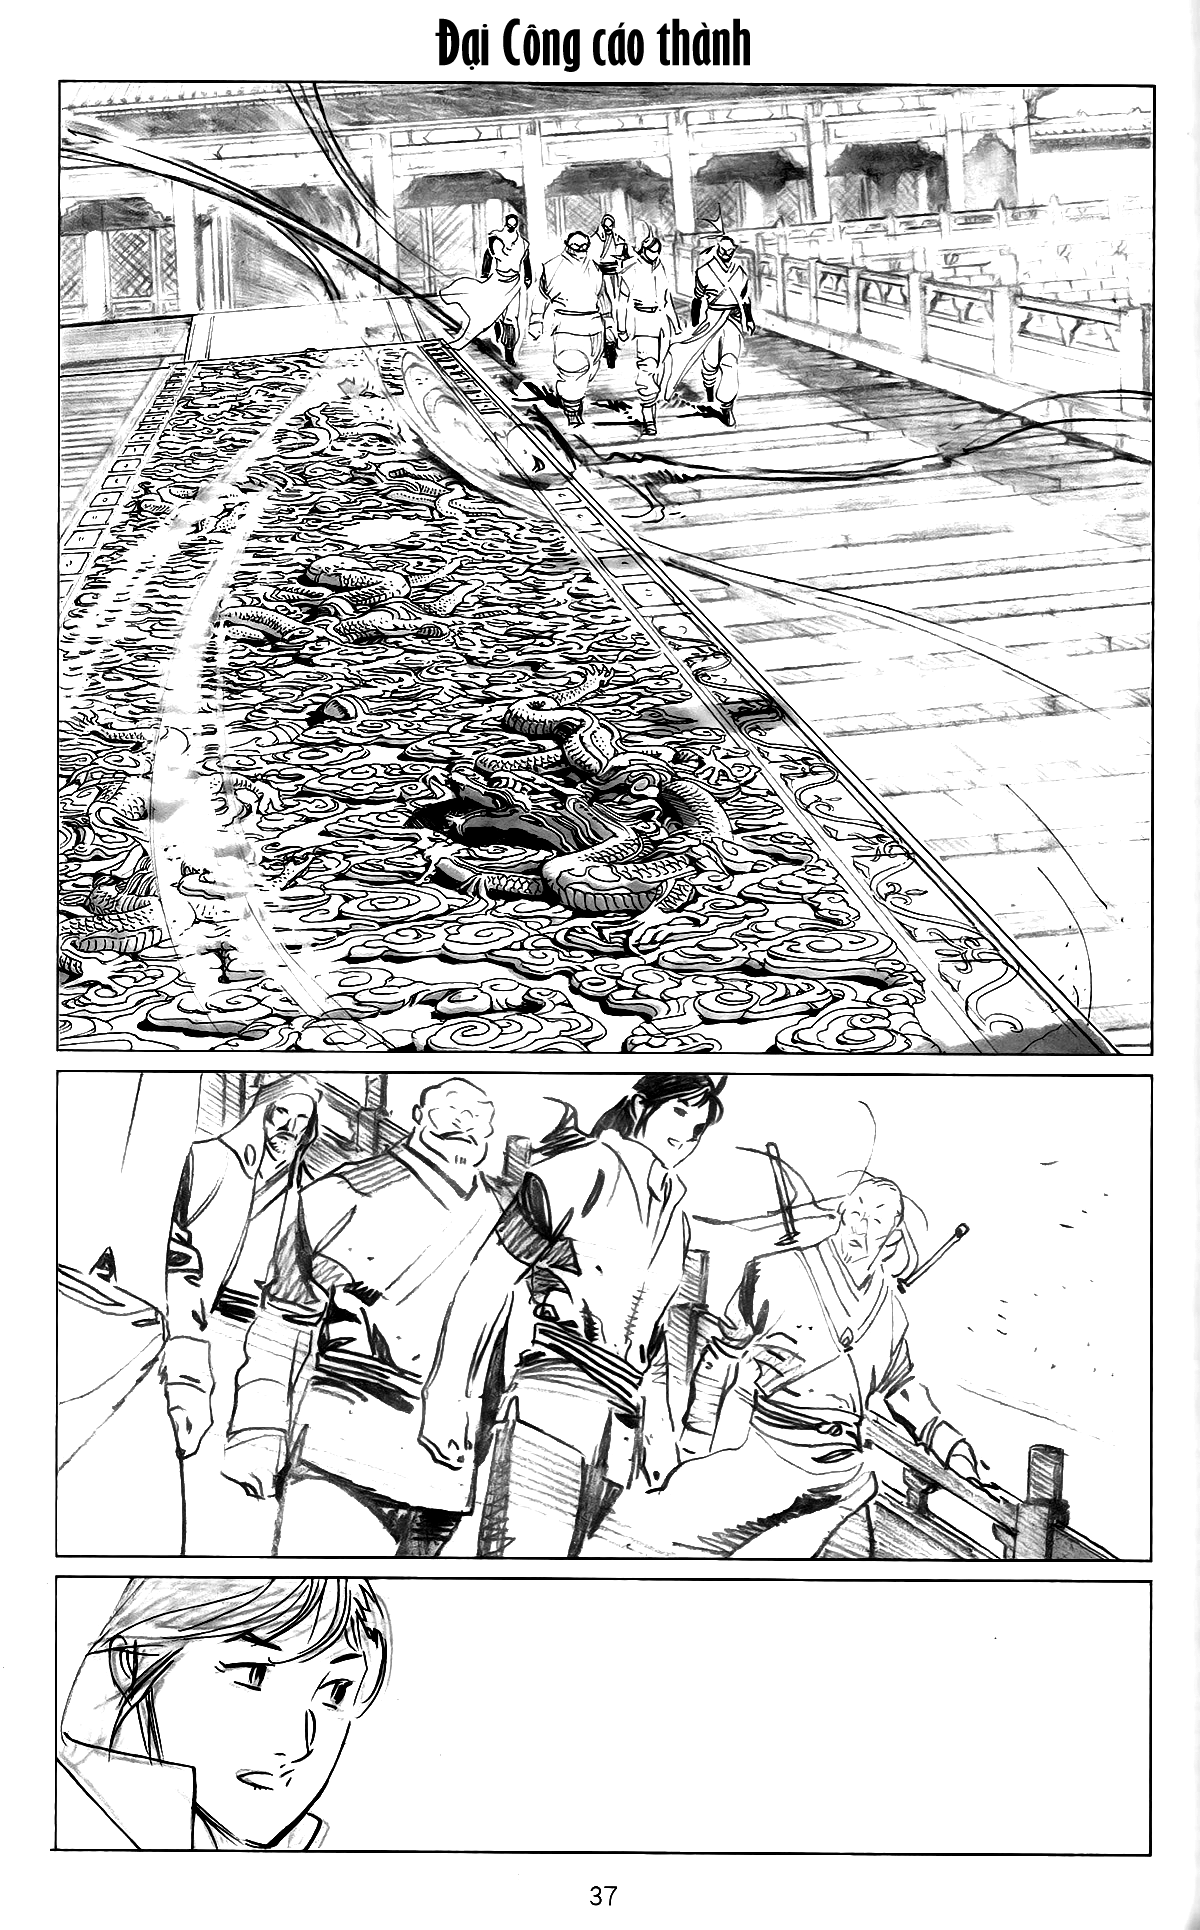 Phong Vân chap 675 (tựa mỗi trang) trang 34